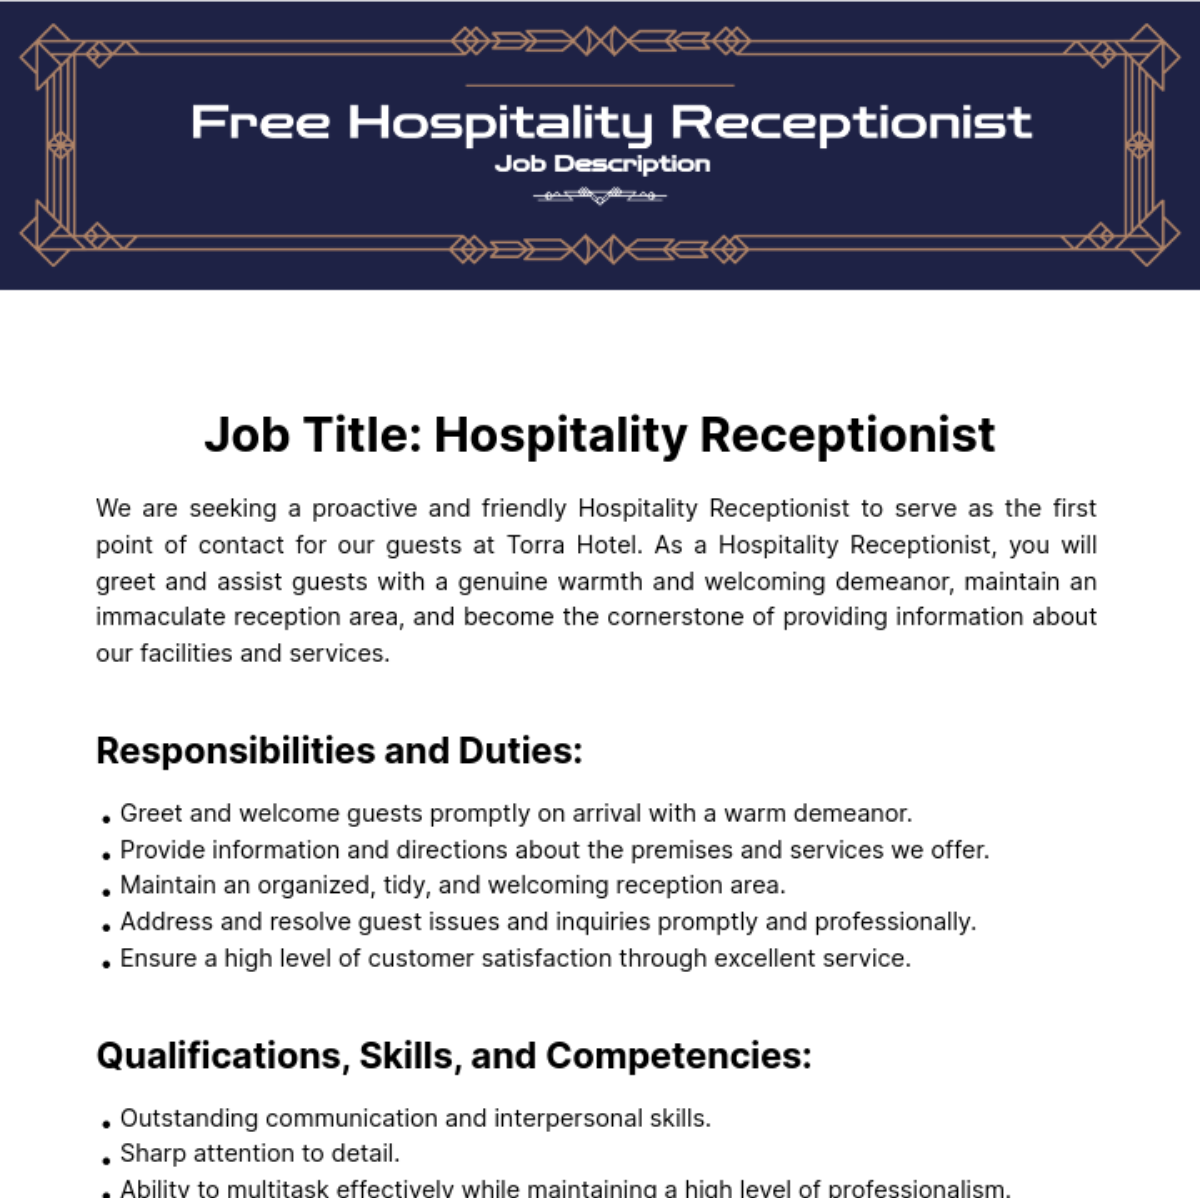 Free Hospitality Receptionist Job Description Template